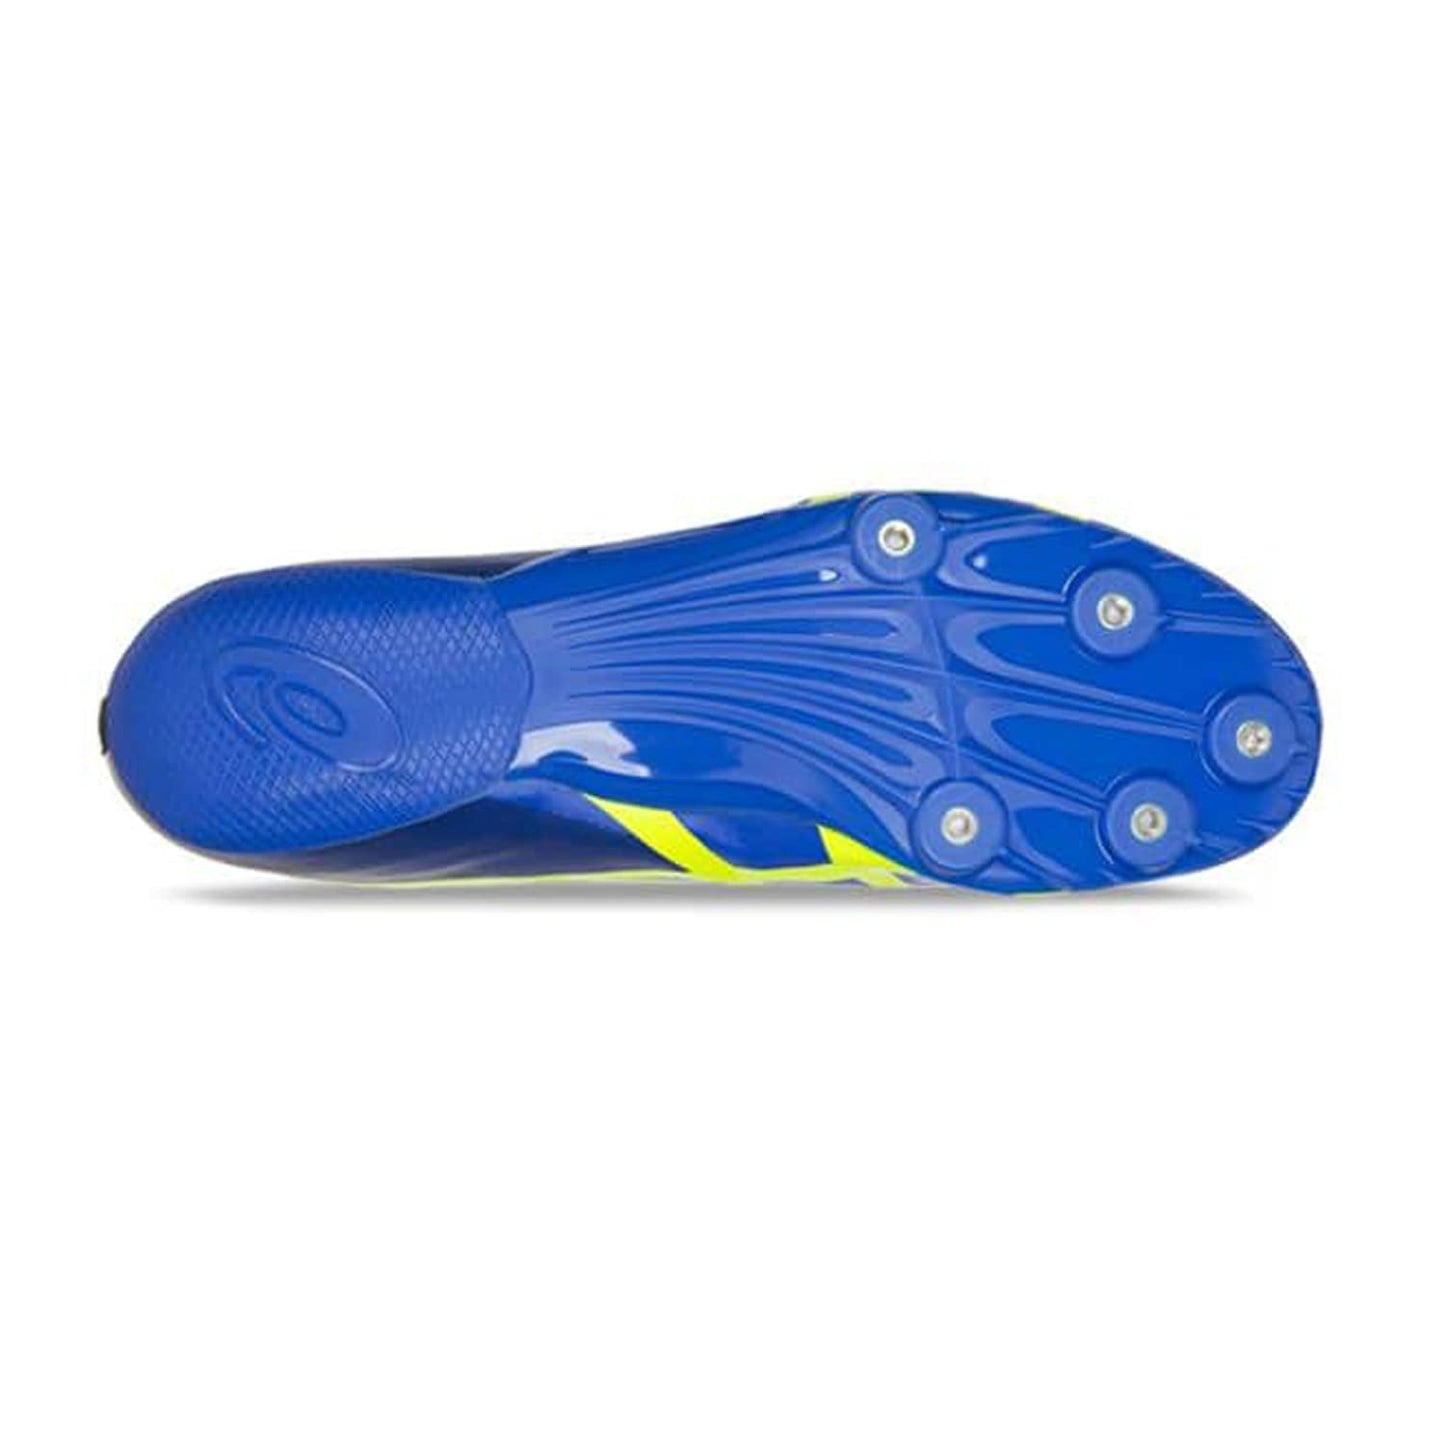 ASICS Men's Hypersprint 7 Running Shoes, Mist/Mist - Best Price online Prokicksports.com